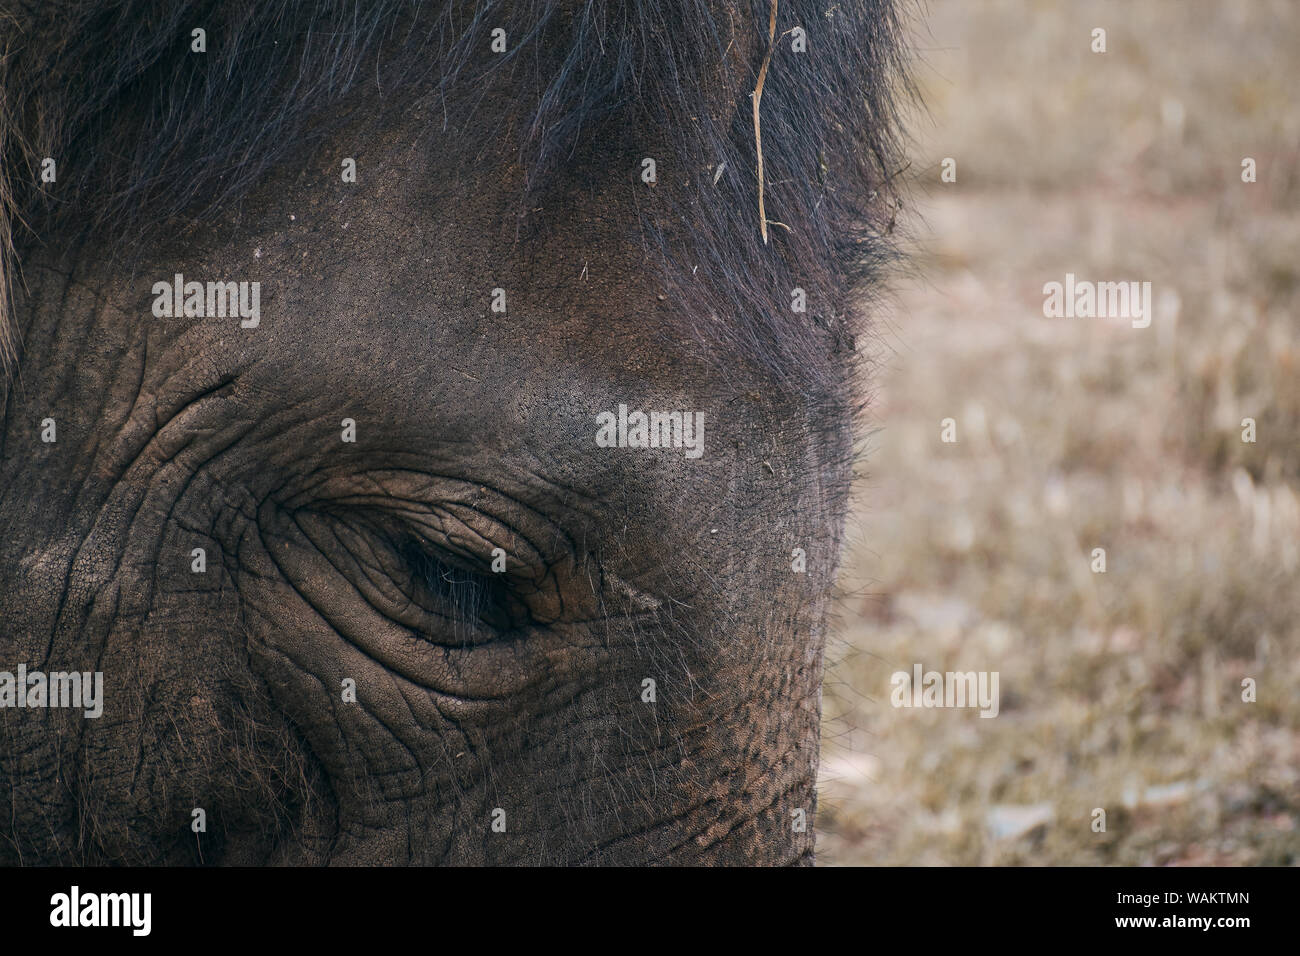 close-up of a sad elephant looking into the camera Stock Photo